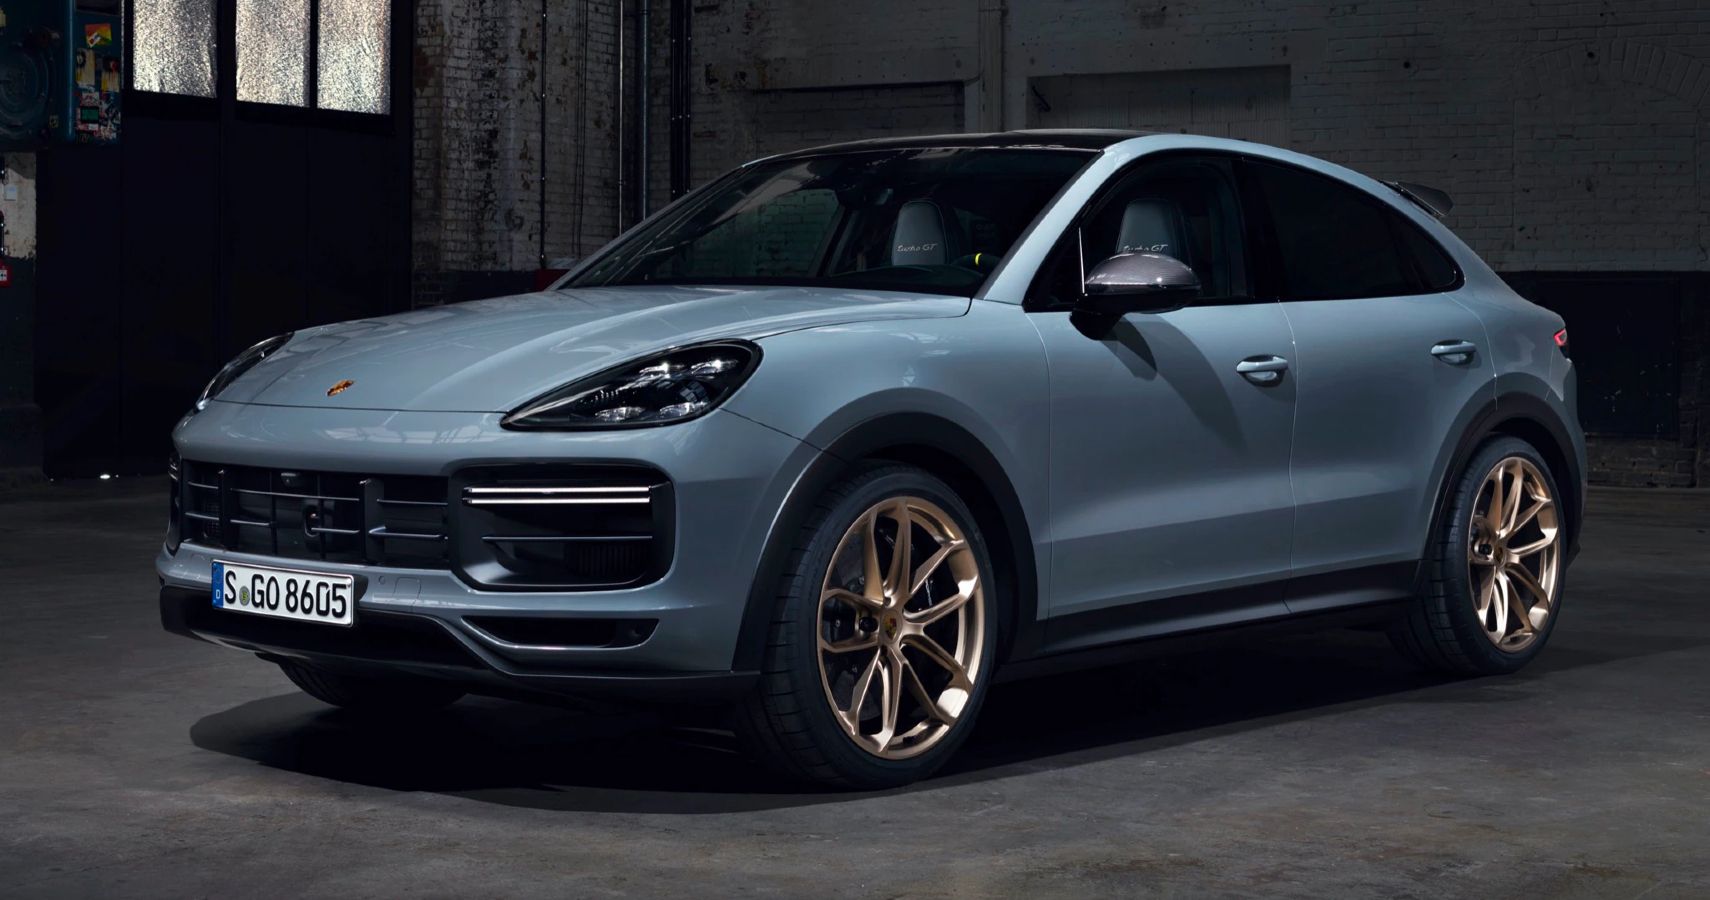 More luxury, more performance: Porsche presents the new Cayenne - Porsche  Newsroom